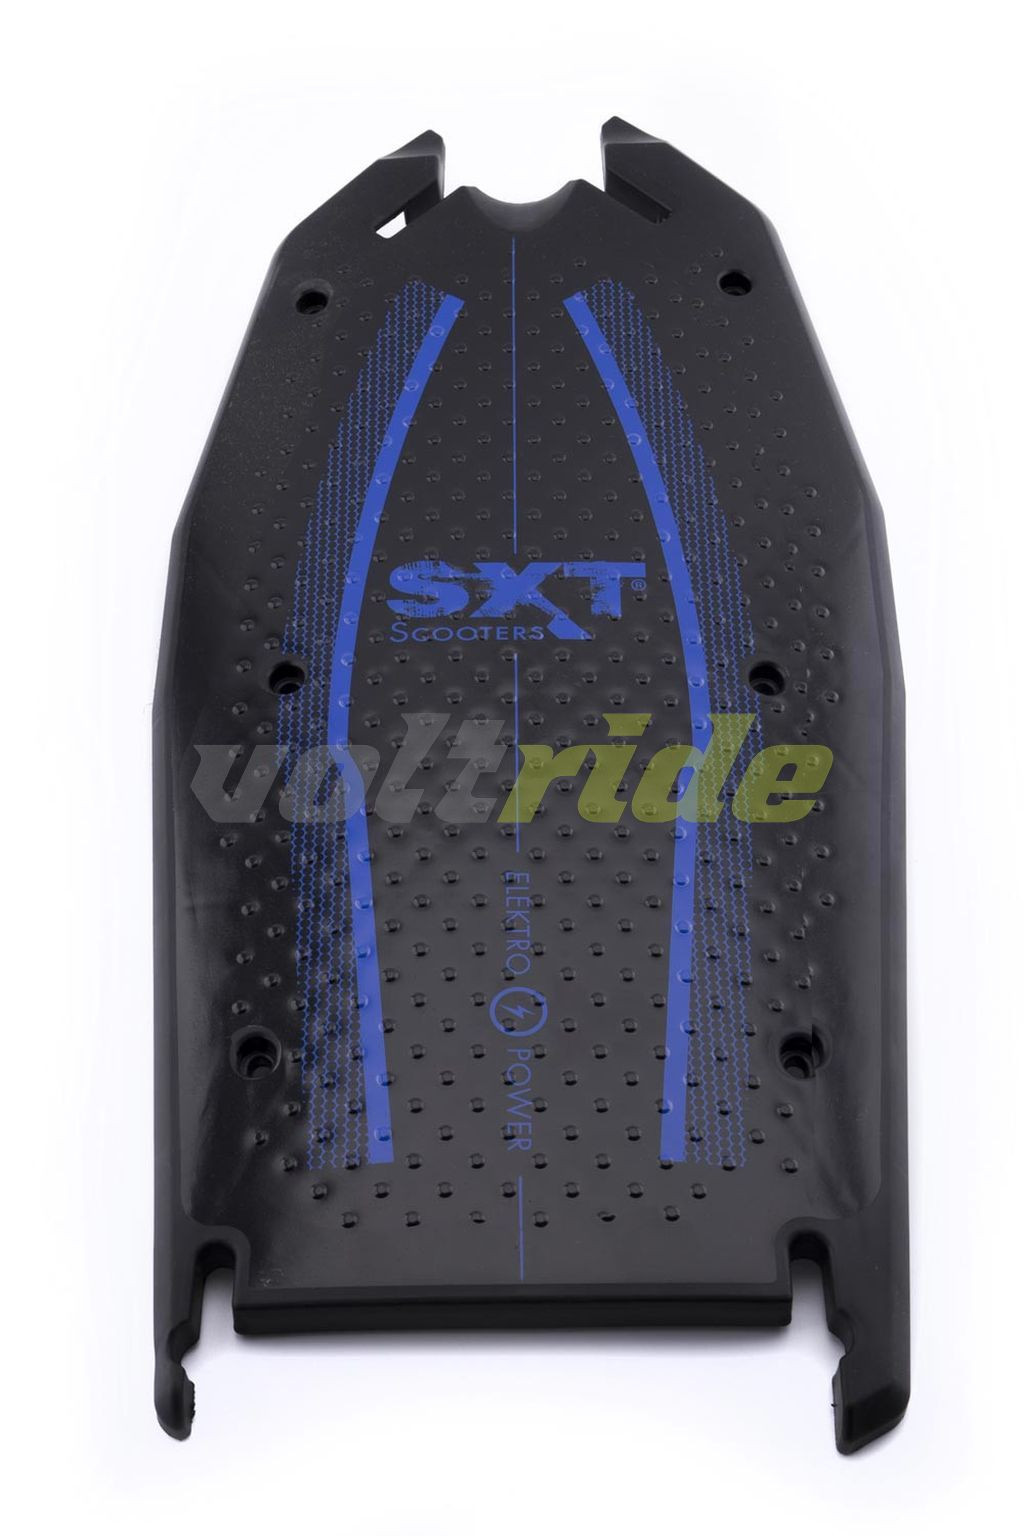 SXT Footplate plastic, Black-blue